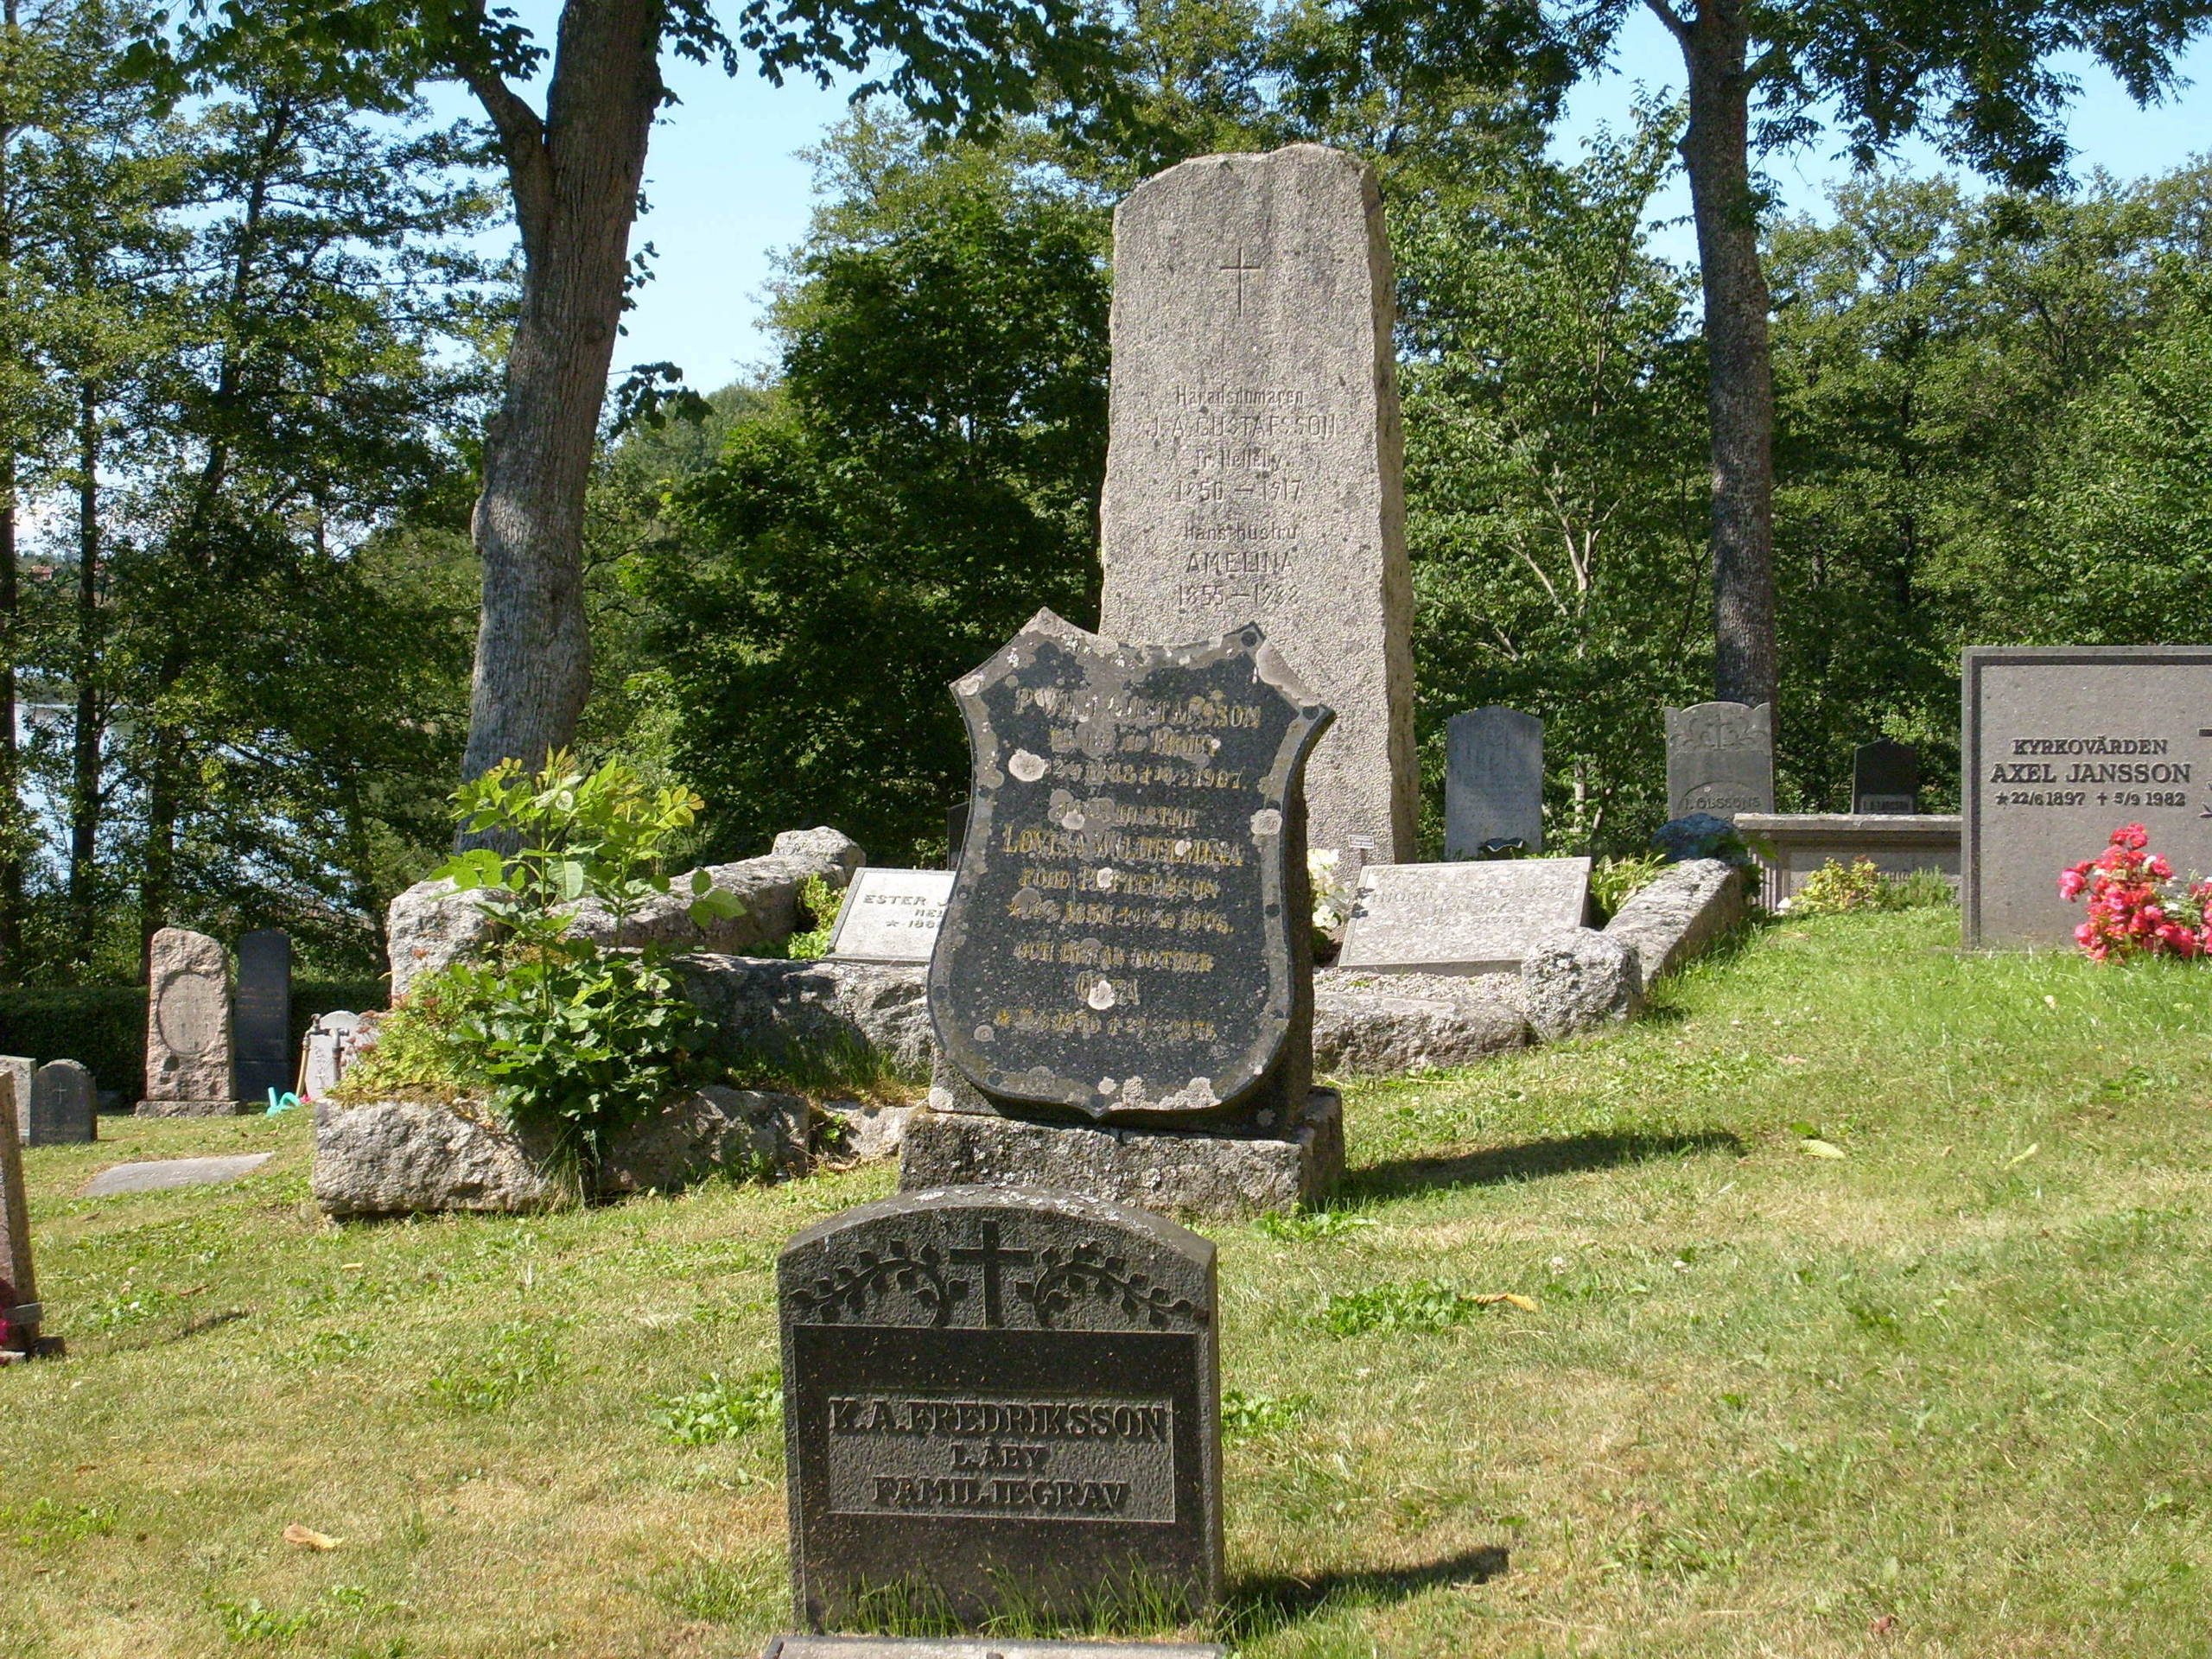 Graves-in-Sweden-cemeteries-and-graveyards-1912559-2560-1920.jpg